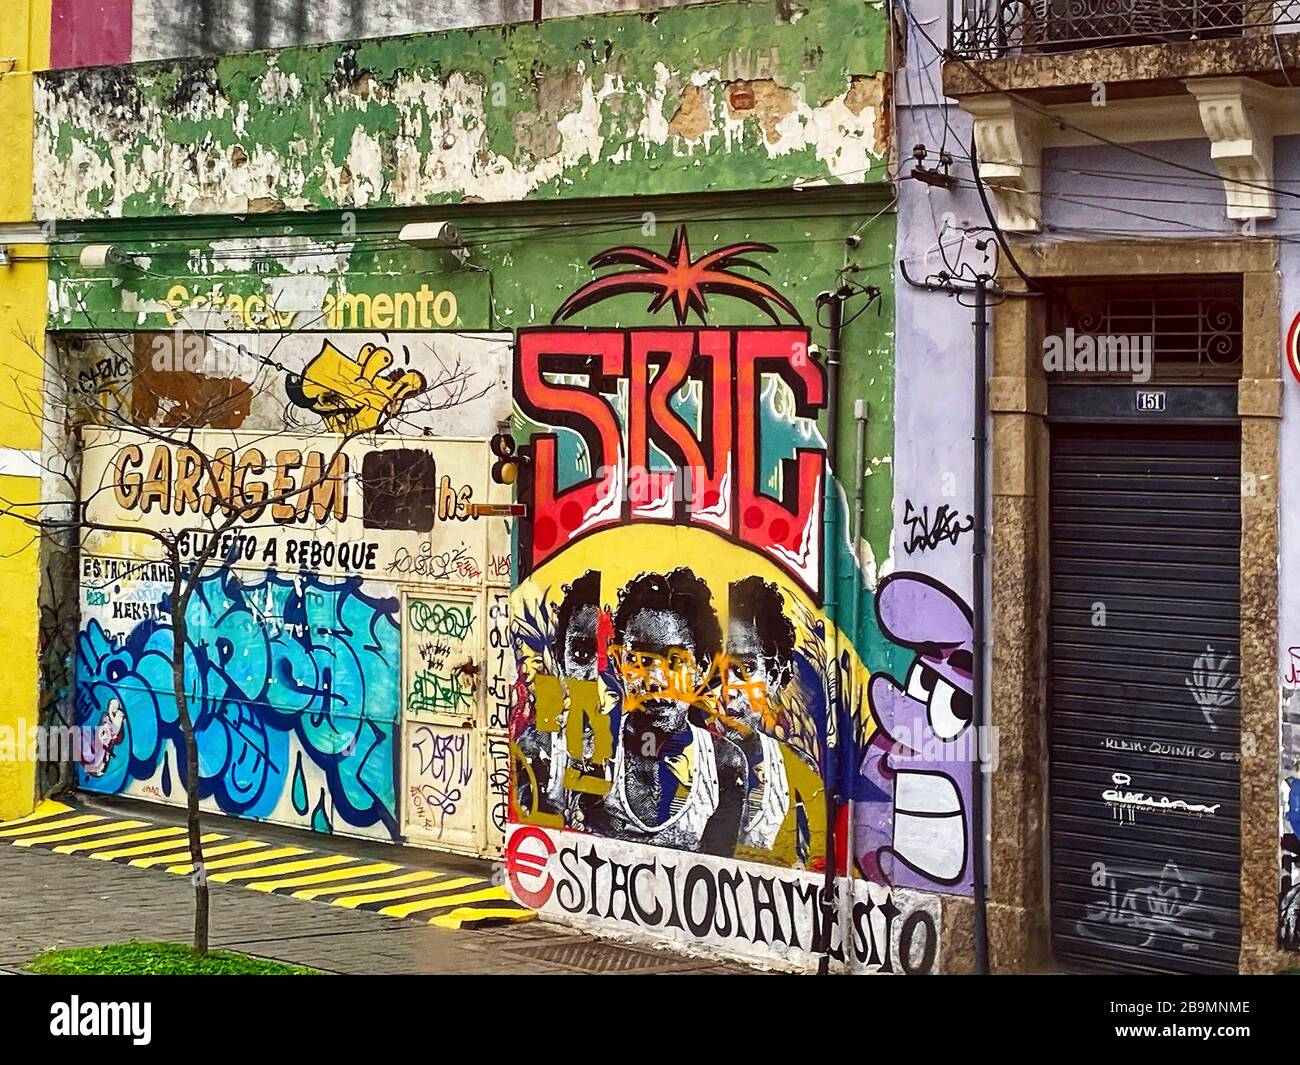 Brazil :D Amgela6 - Illustrations ART street